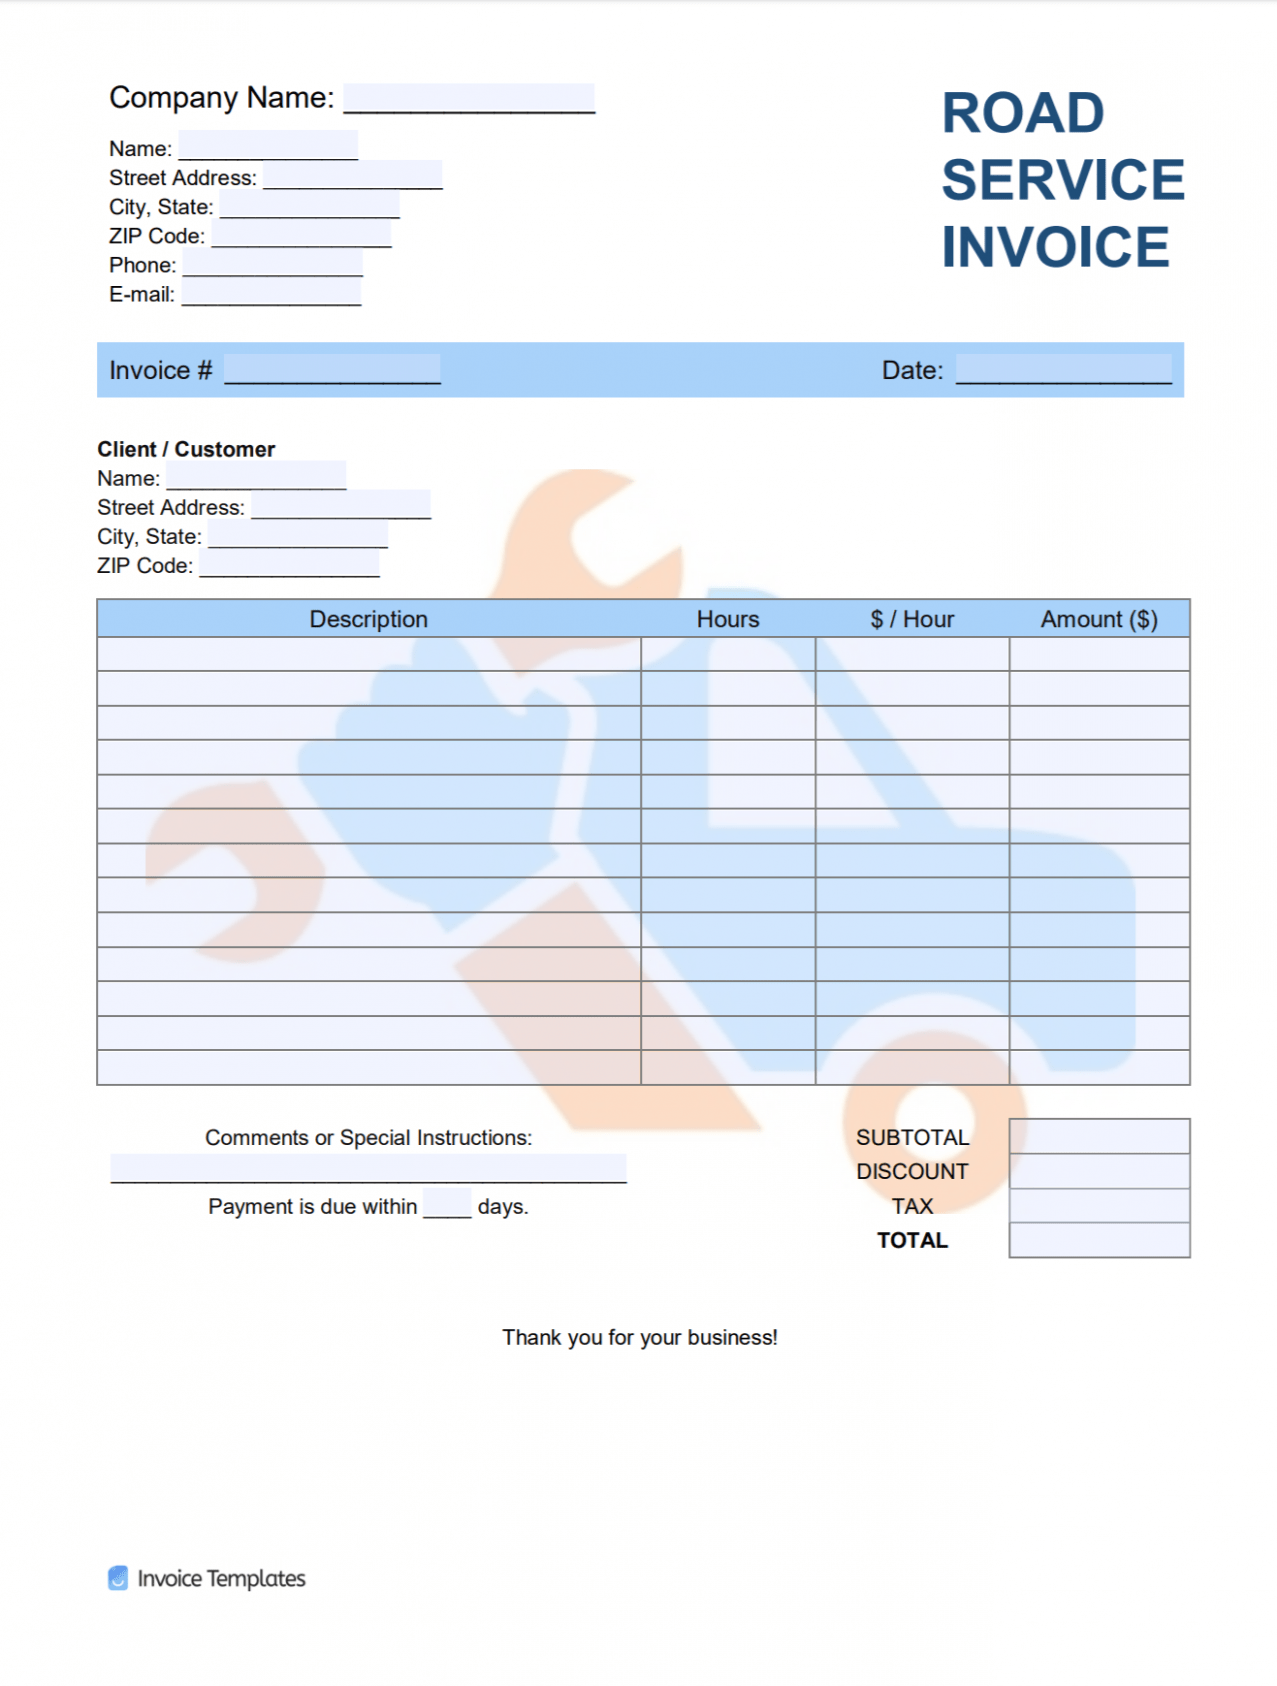 Sample Road Service Invoice Template Sample